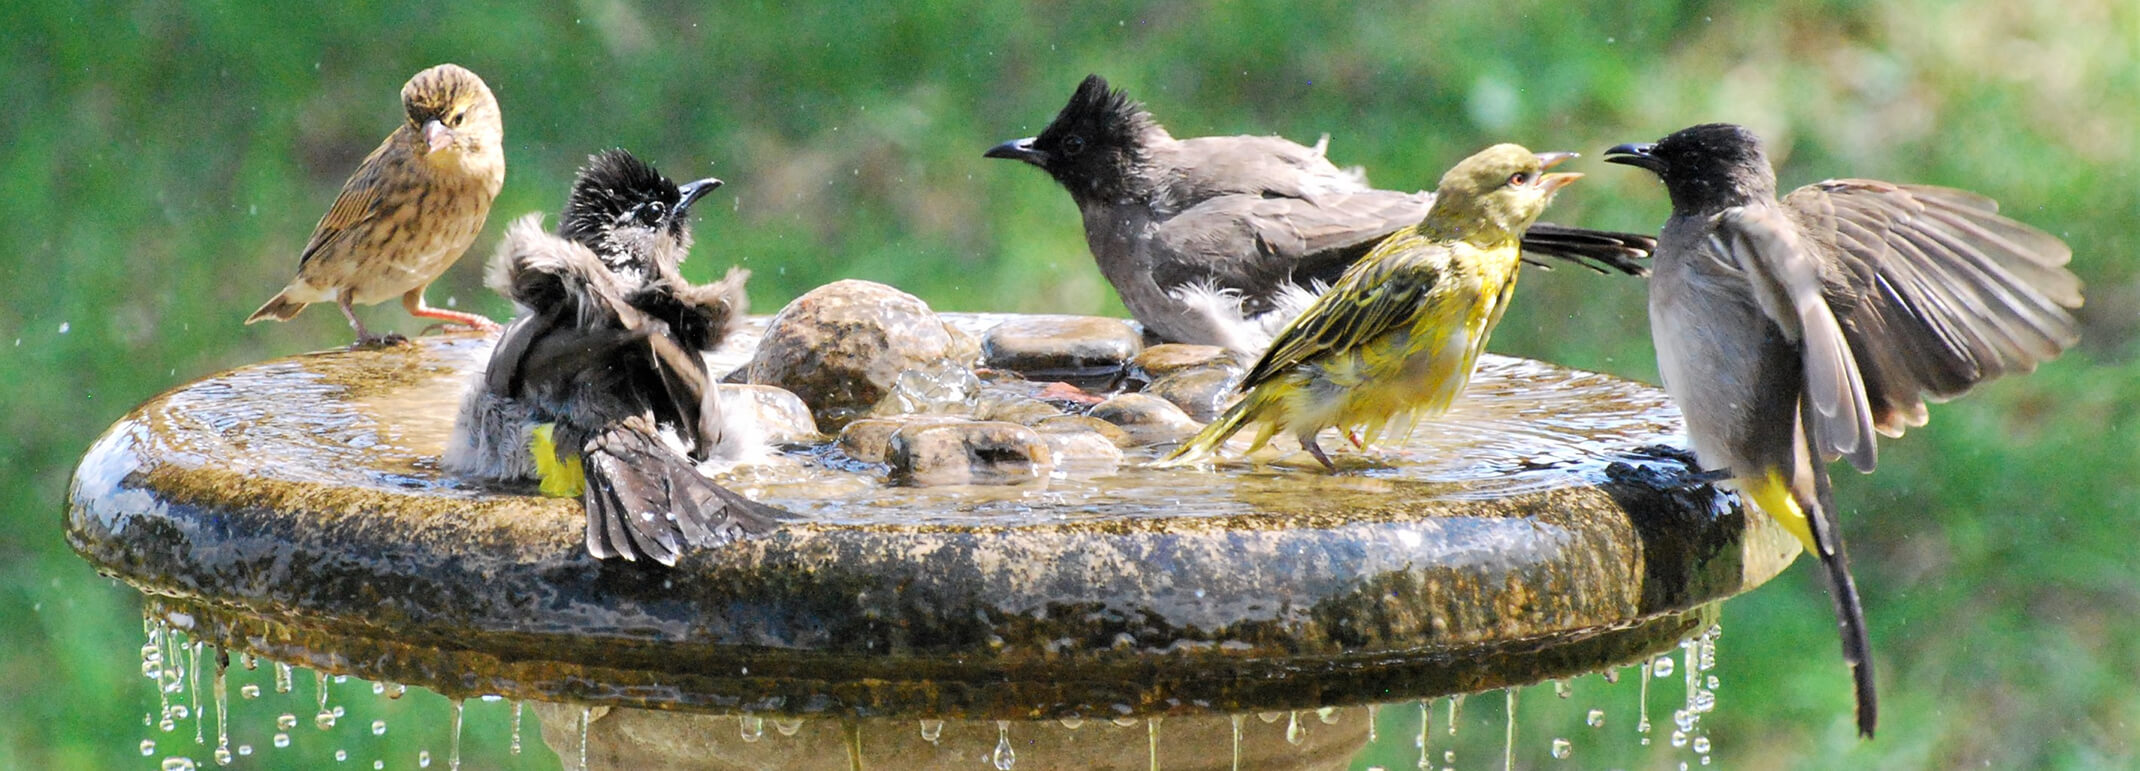 Multiple birds playing and splashing in bird bath